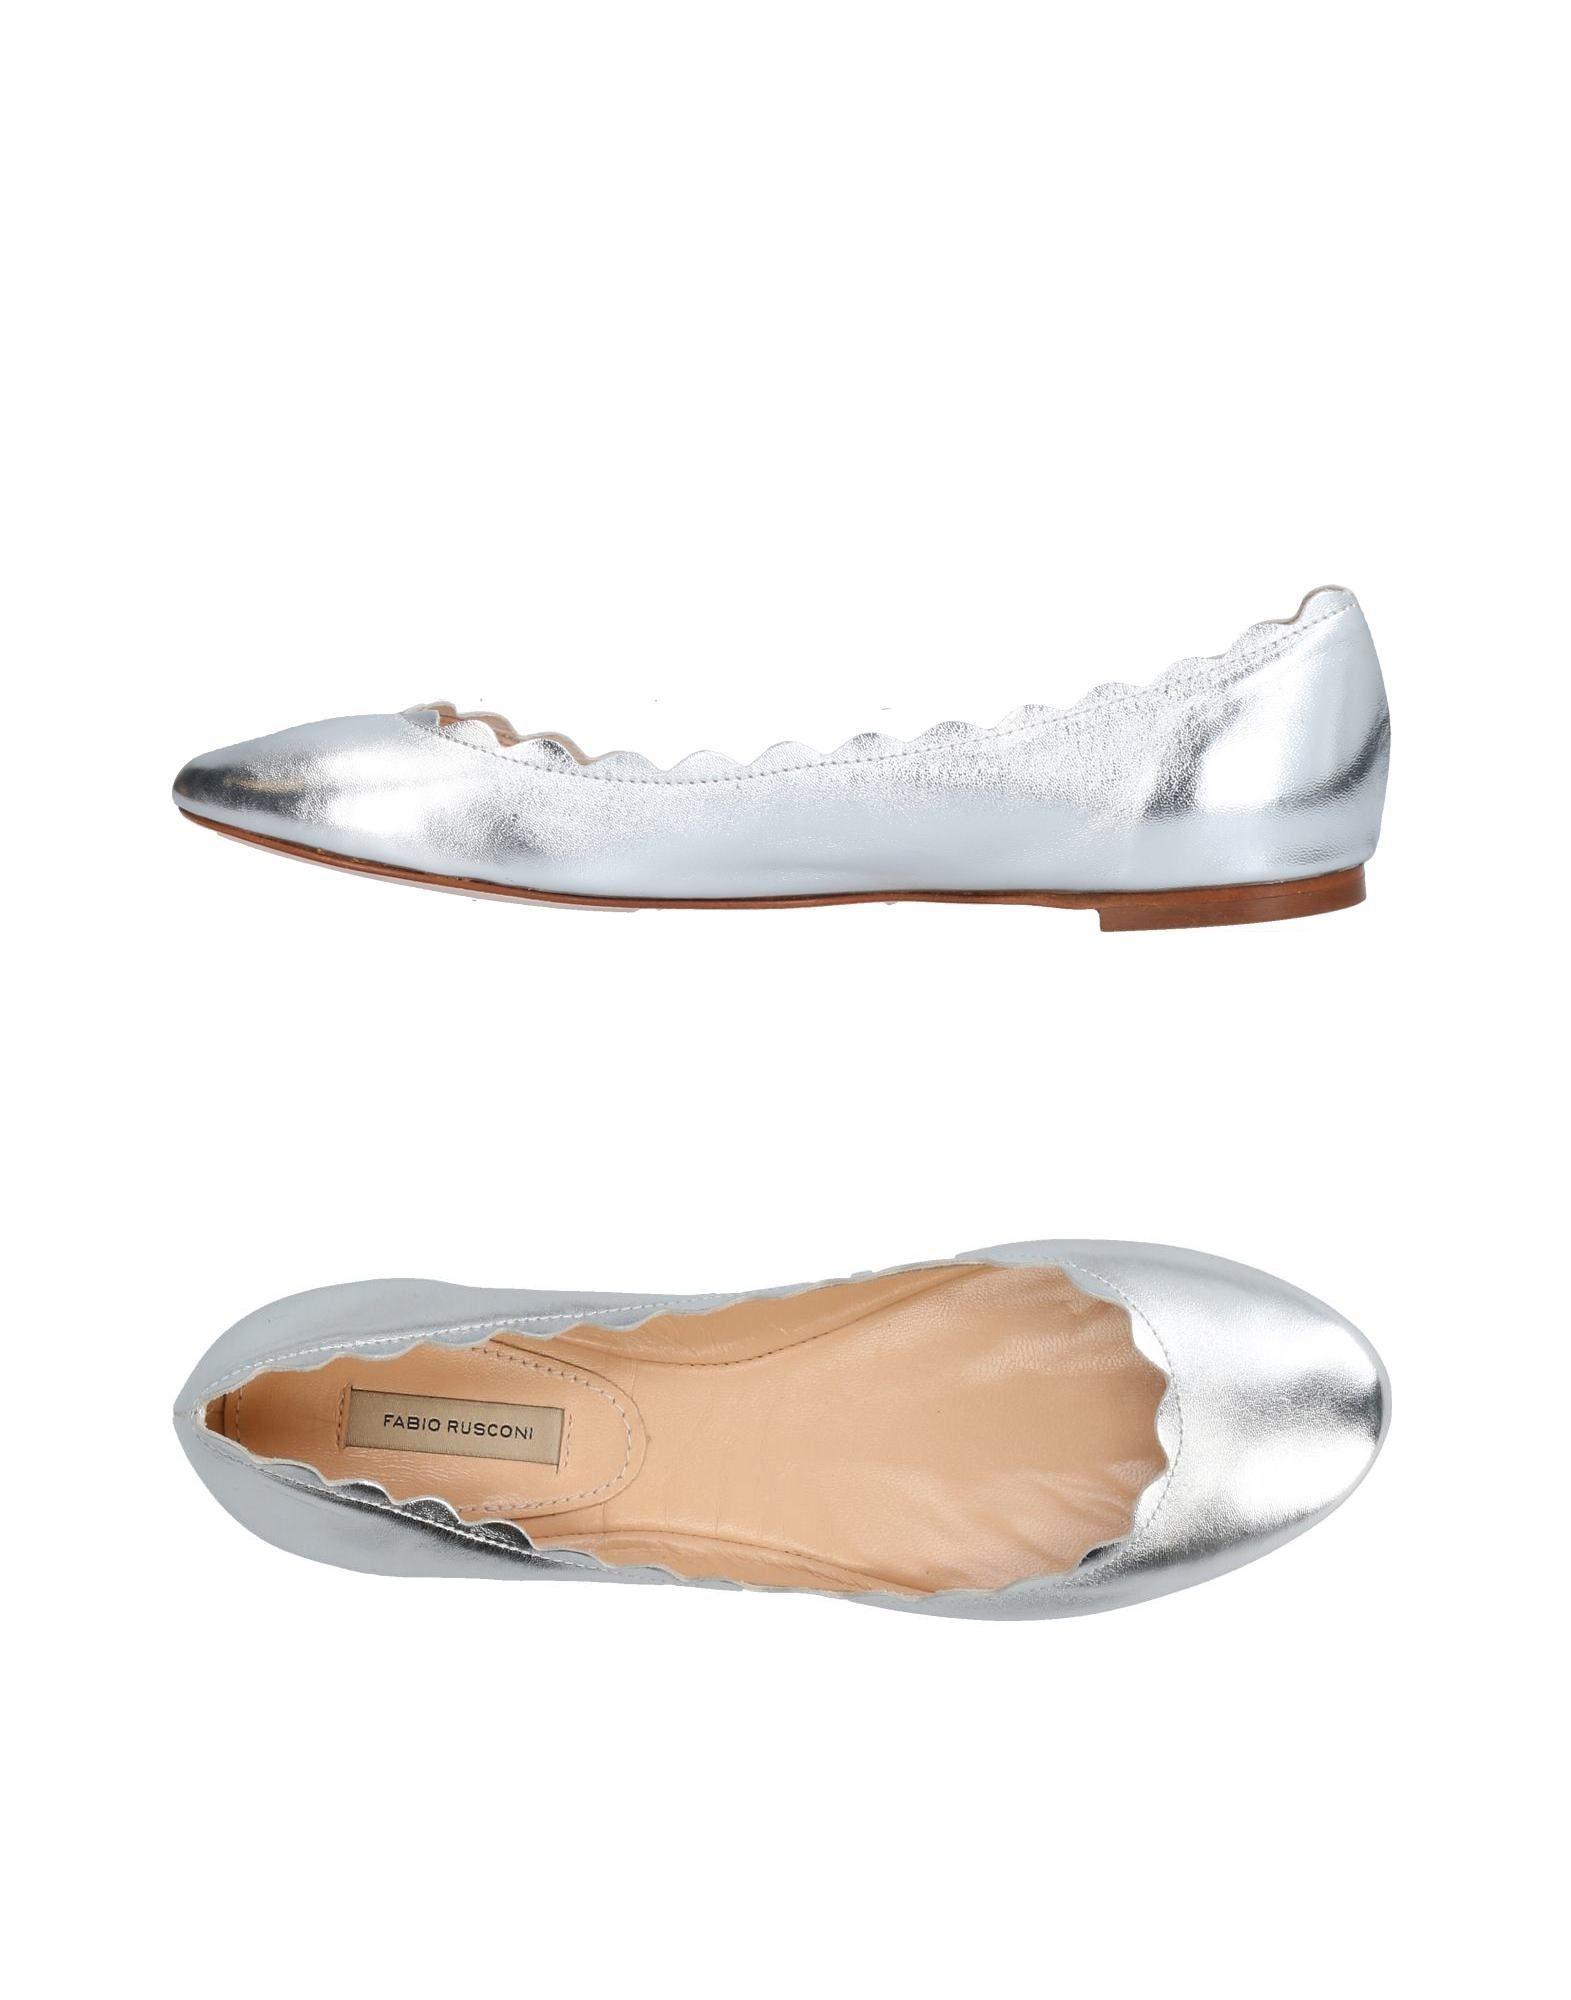 Fabio Rusconi Leather Ballet Flats in Silver (Metallic) - Lyst